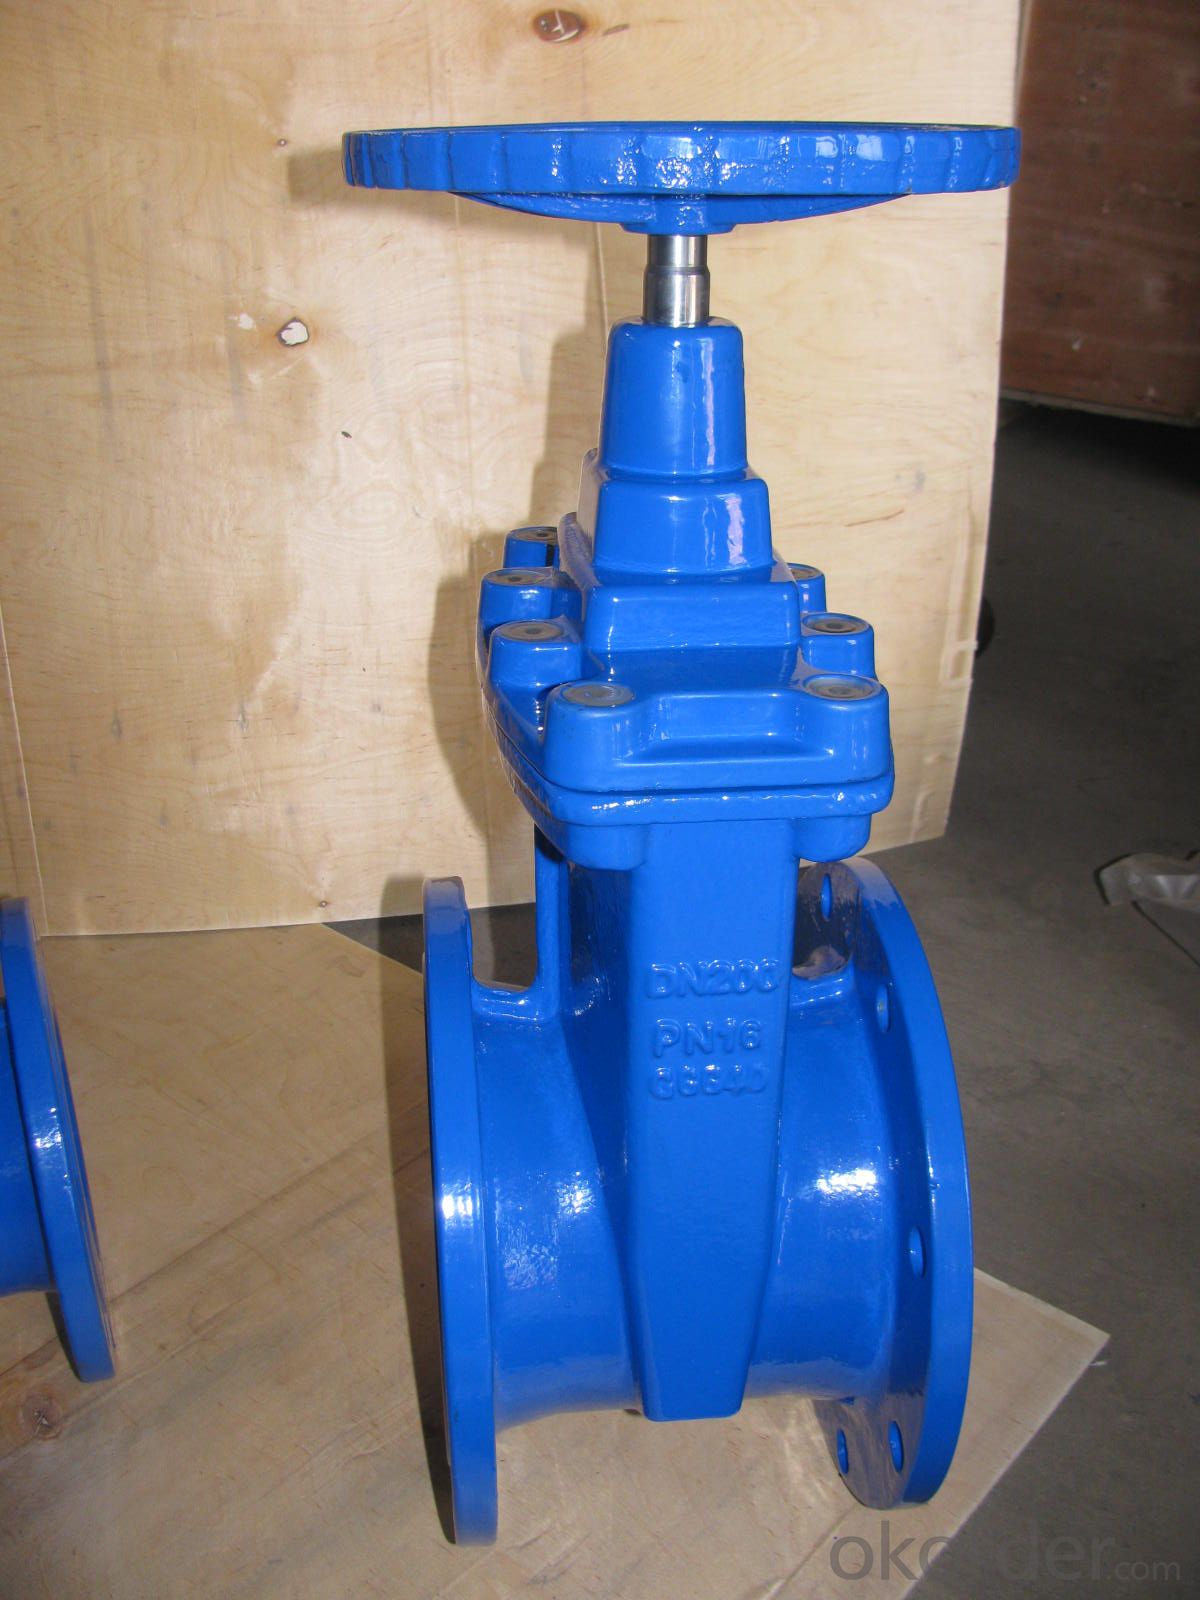 Ductile iron valve ,gate valve high quality